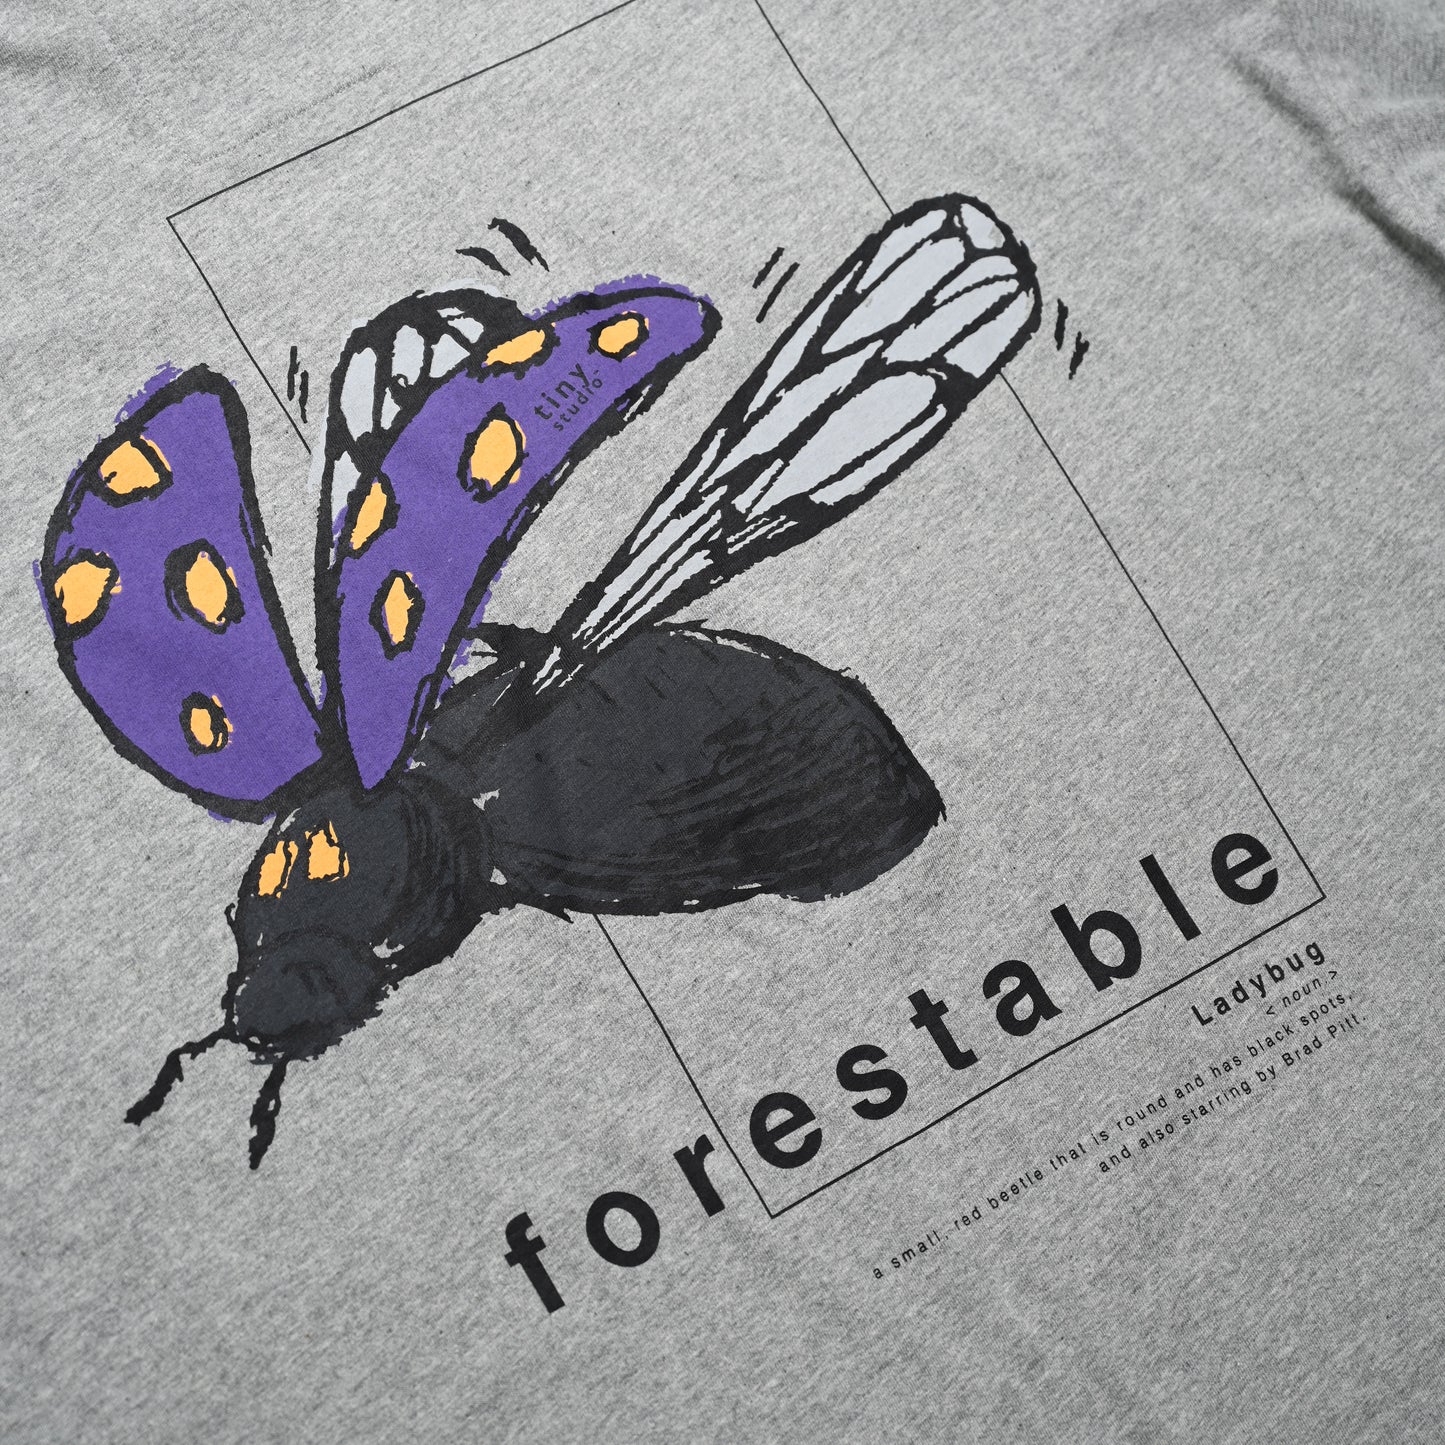 FRSTB LadyBug Collection L/S T-Shirt／長袖上衣